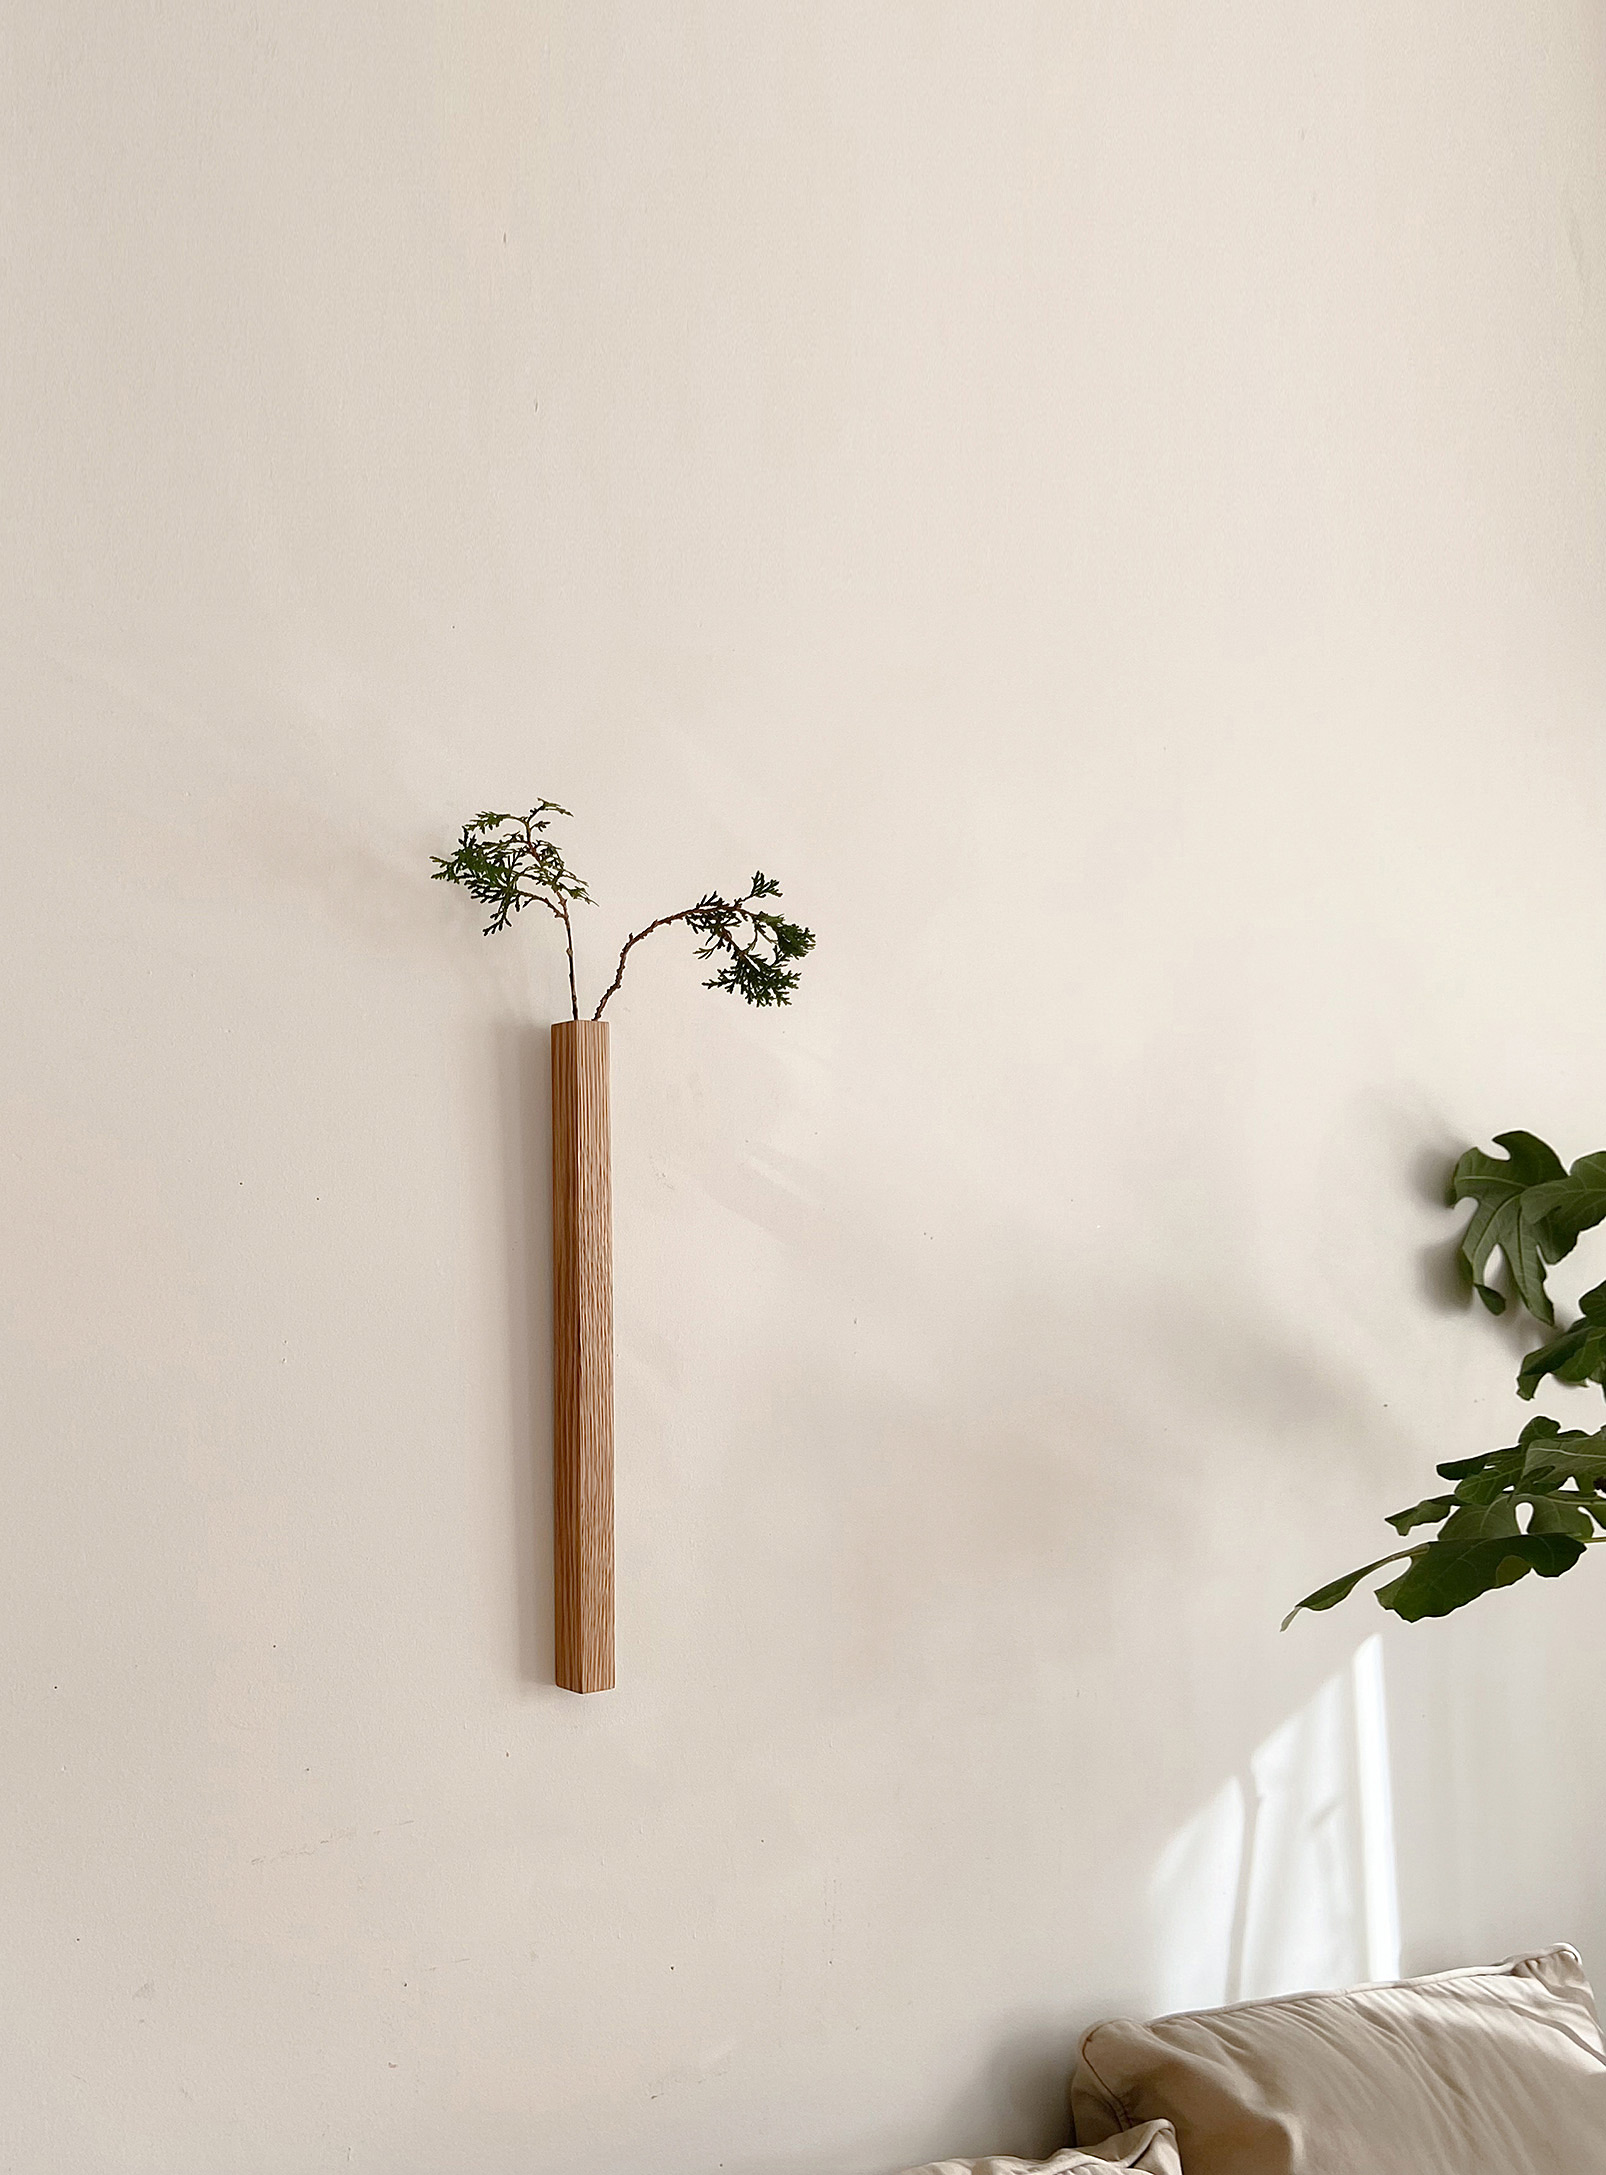 Haeven Studio - Oak rod wall vase 40.5 cm tall